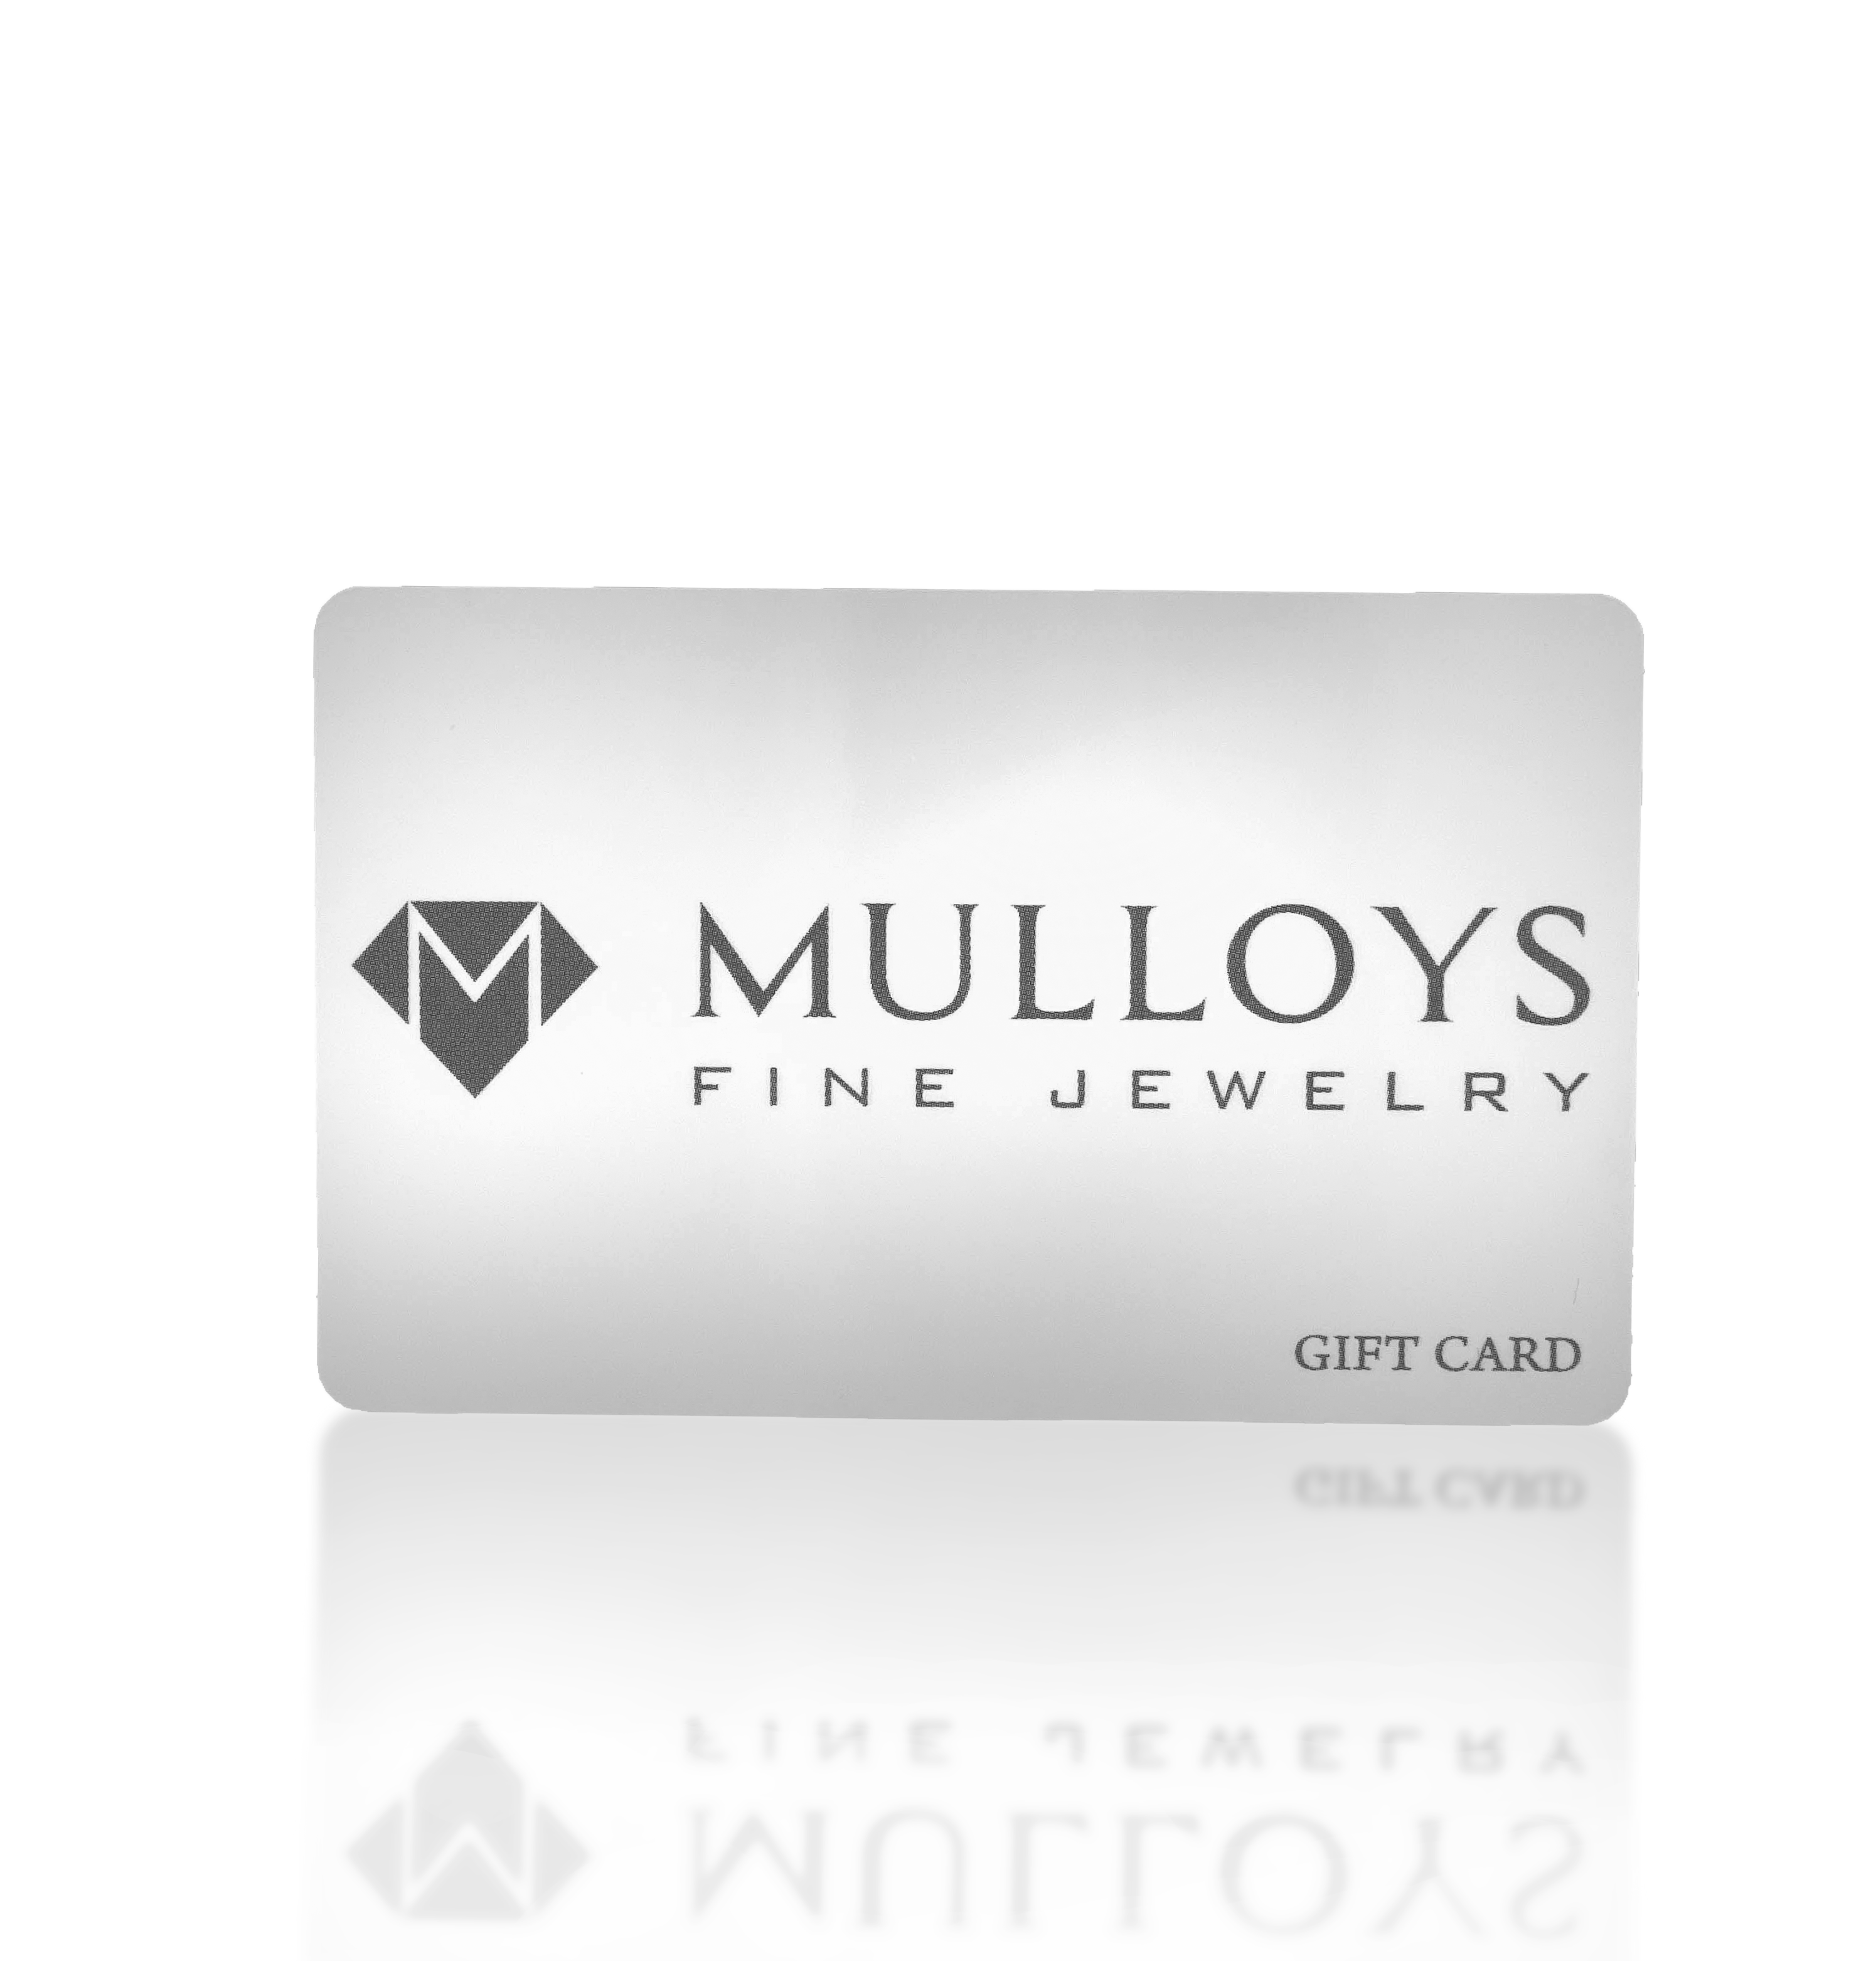 Mulloys $100 Gift Card